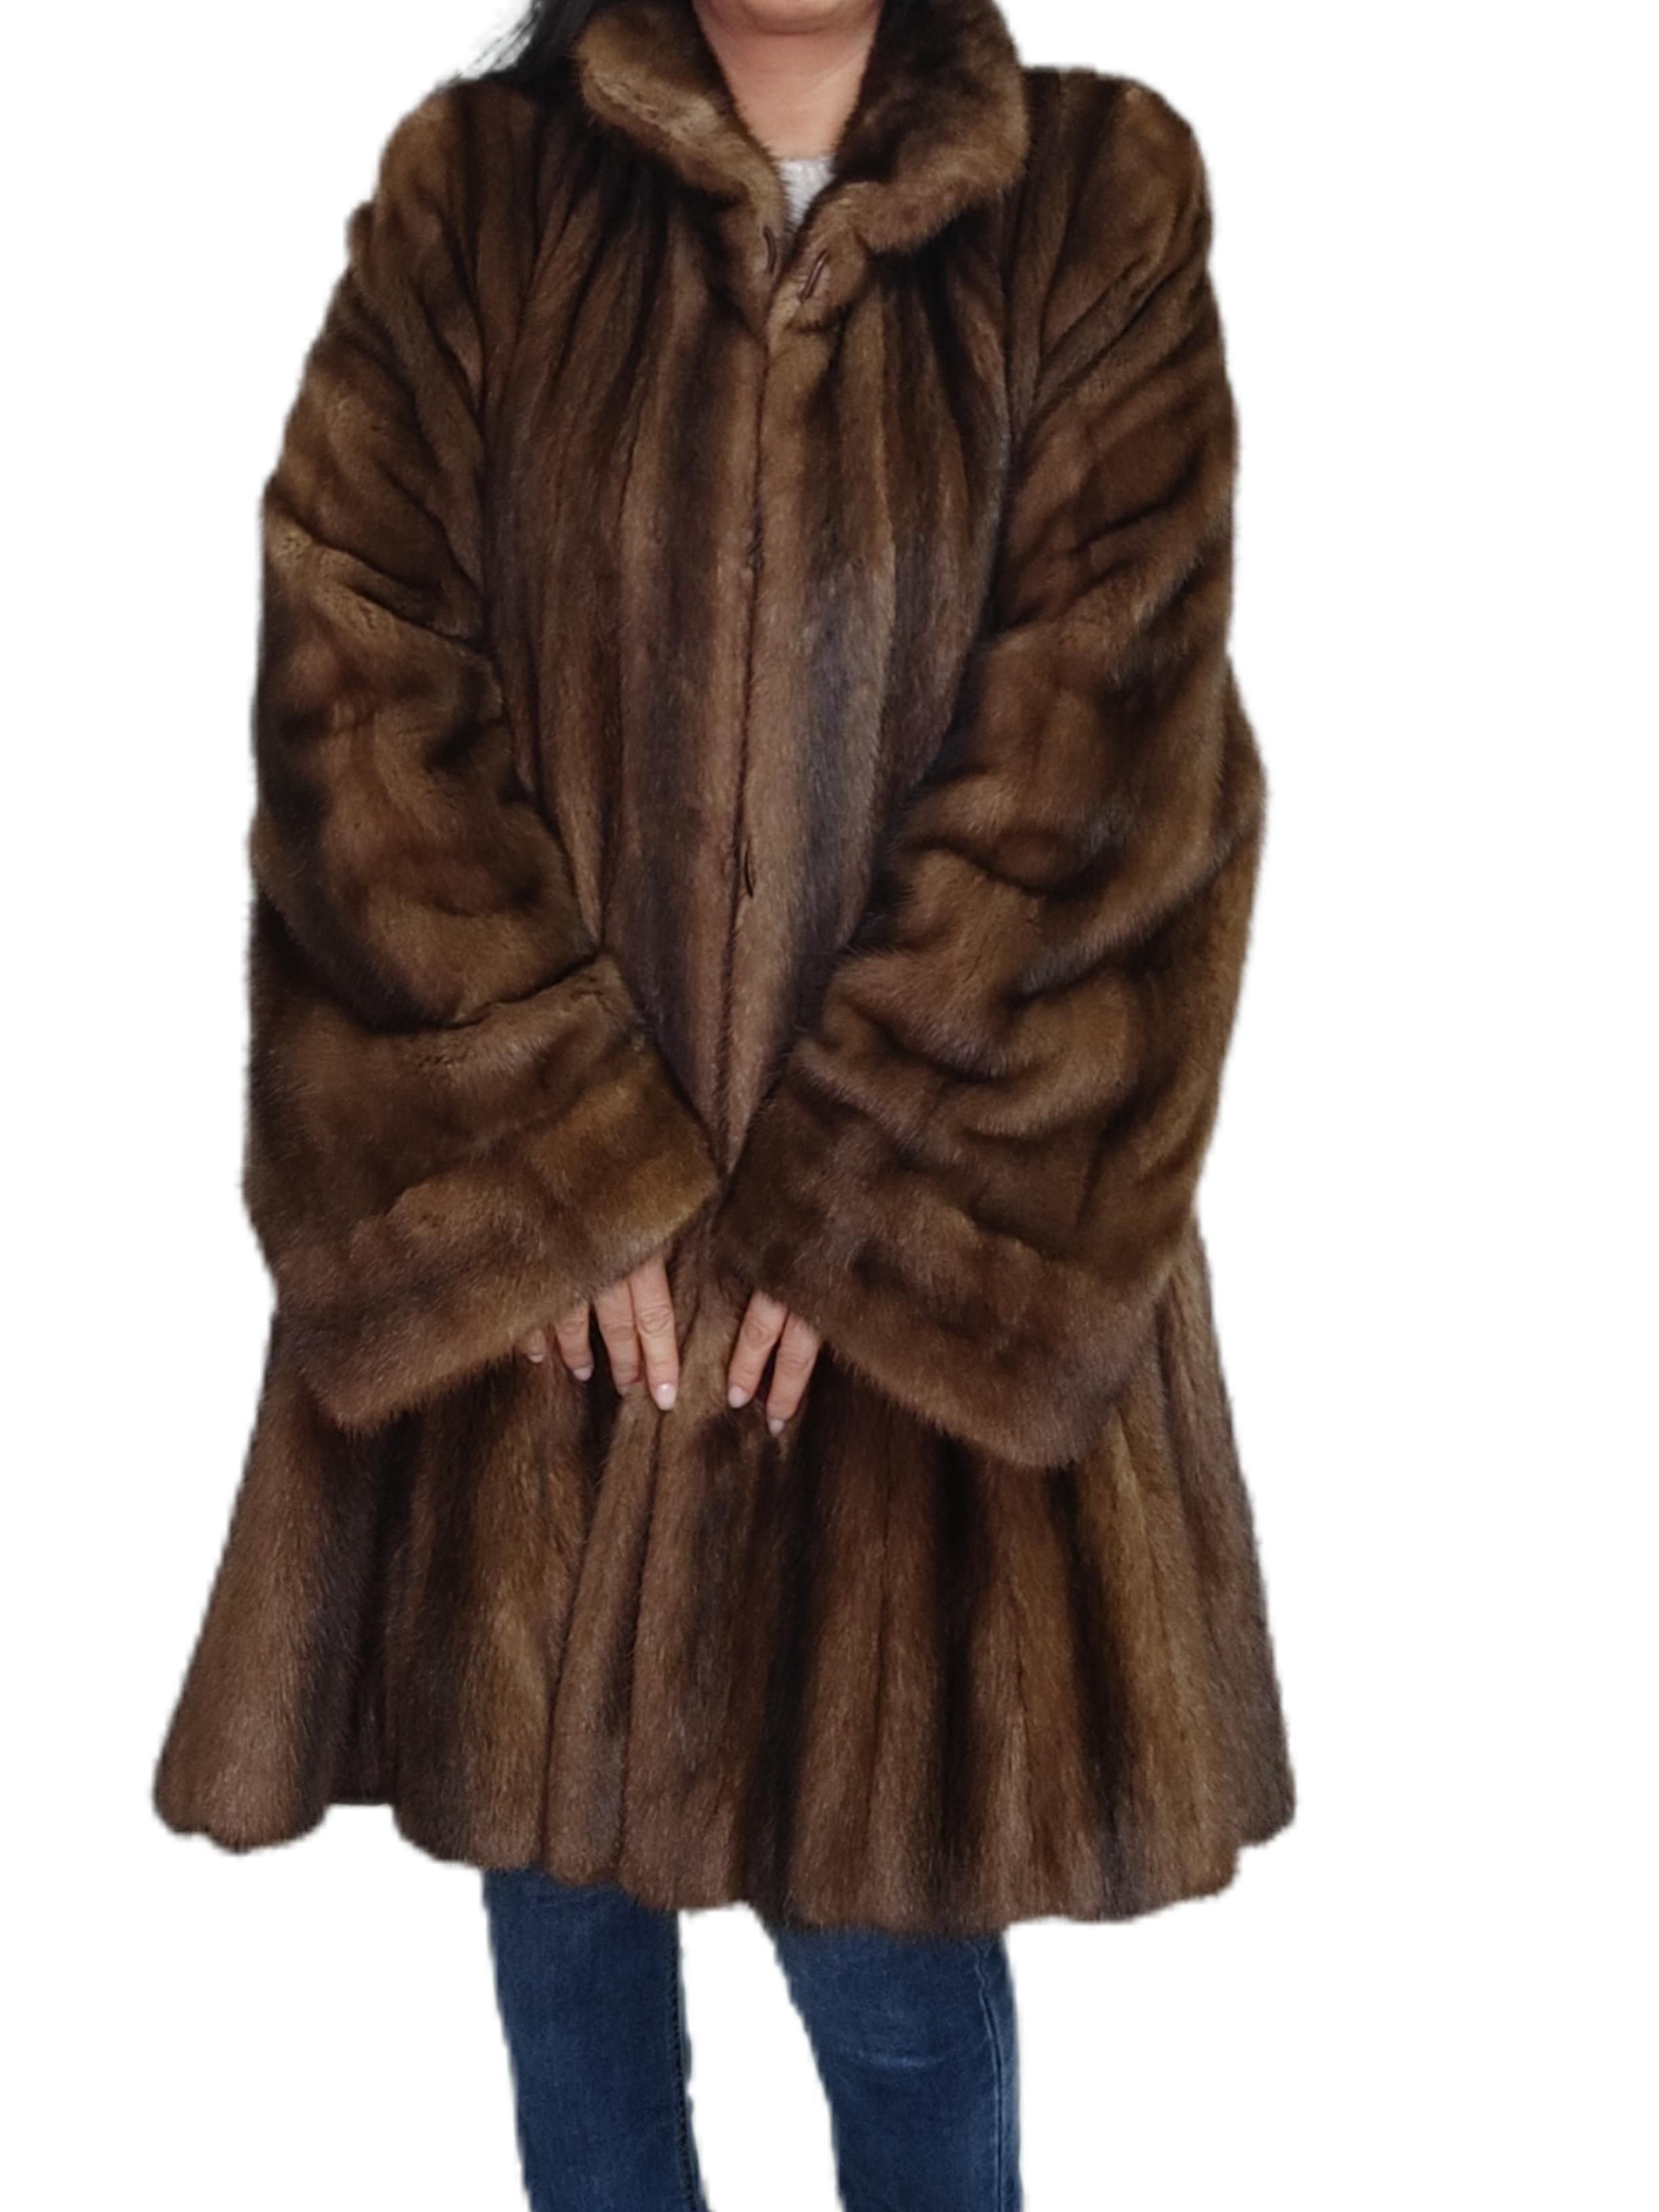 Black Brand New NOS Louis Ferraud Mink Fur Coat reversible size 24